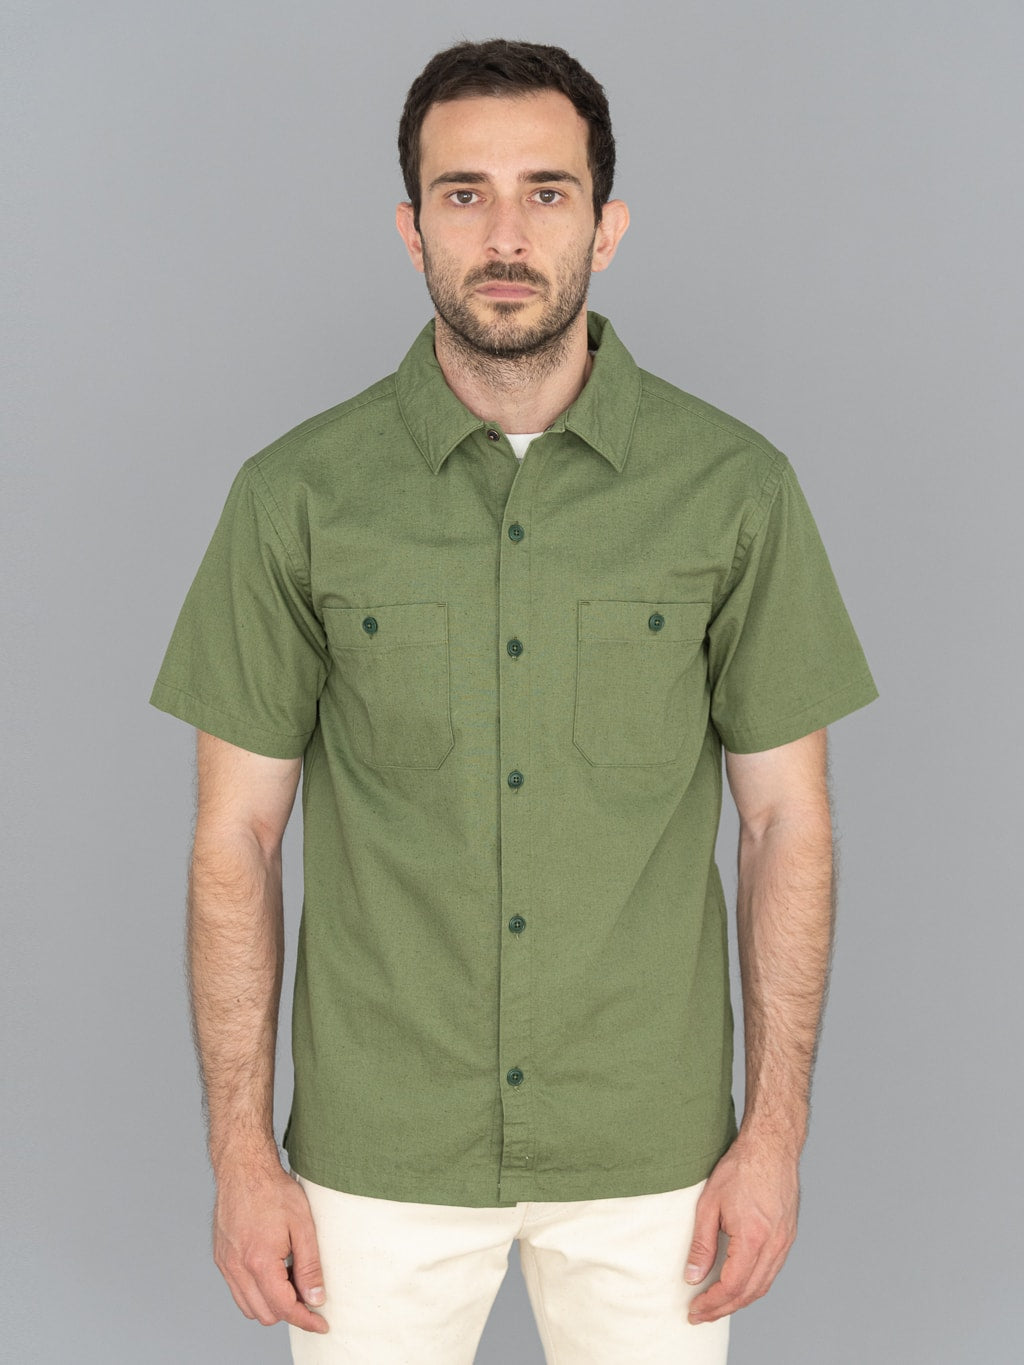 ues denim mechanic shirt sleeves shirt sage green front fit buttoned